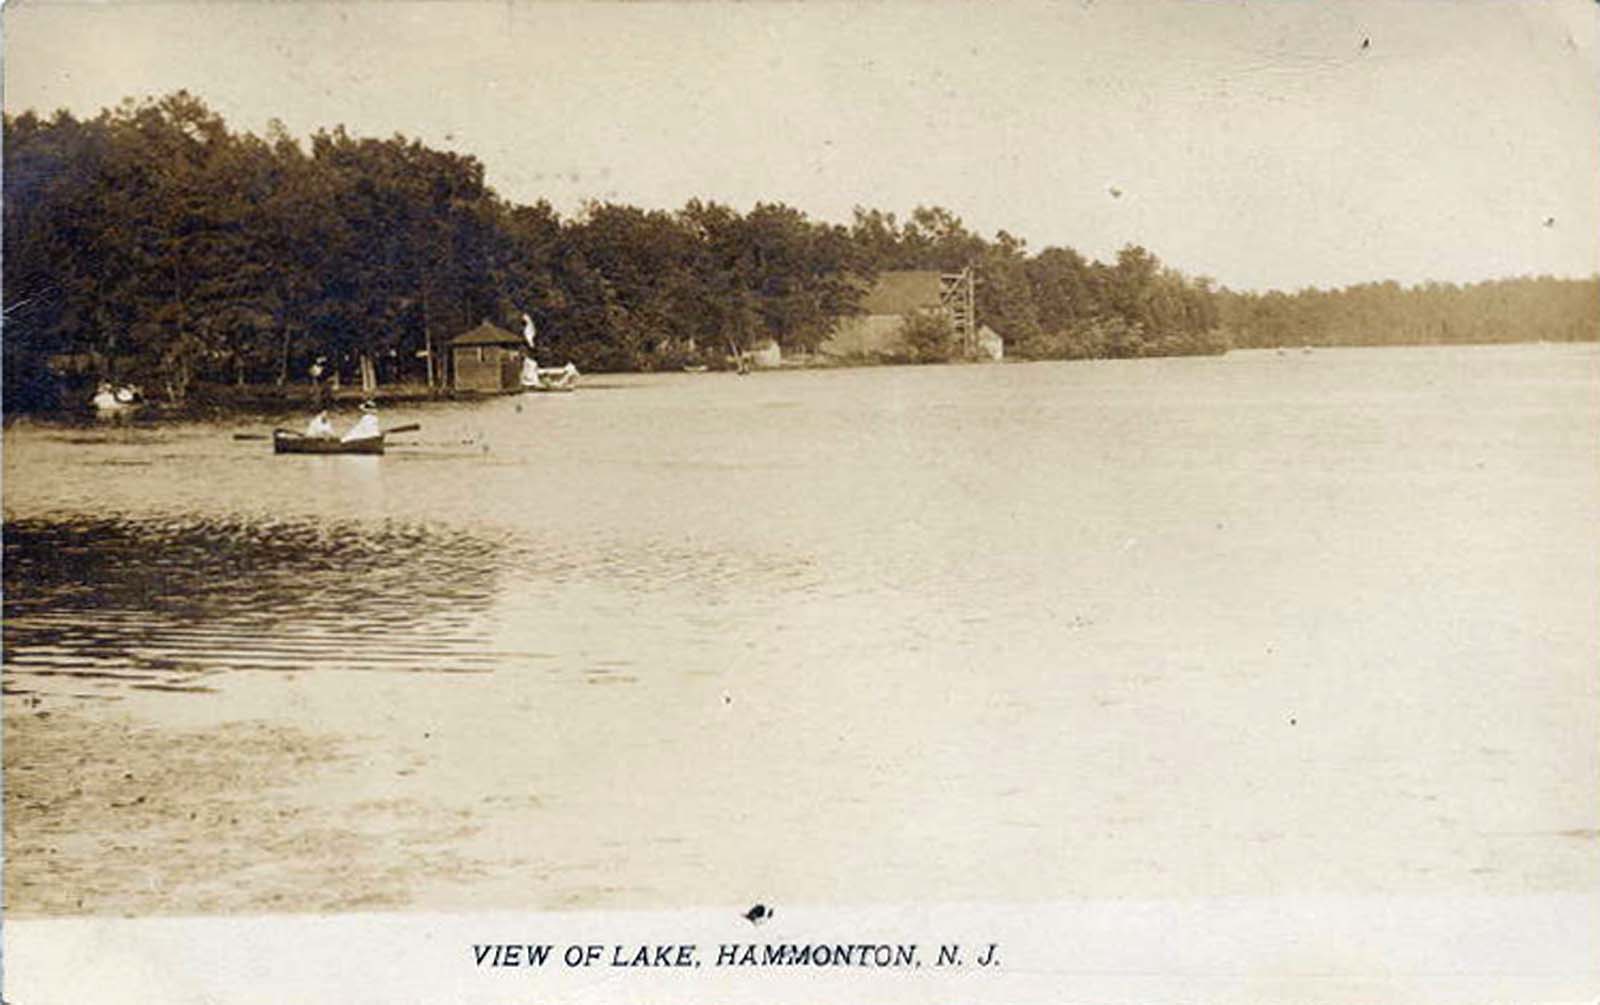 Hammonton - A lake view | Hammonton | Old Pictures of Atlantic County ...